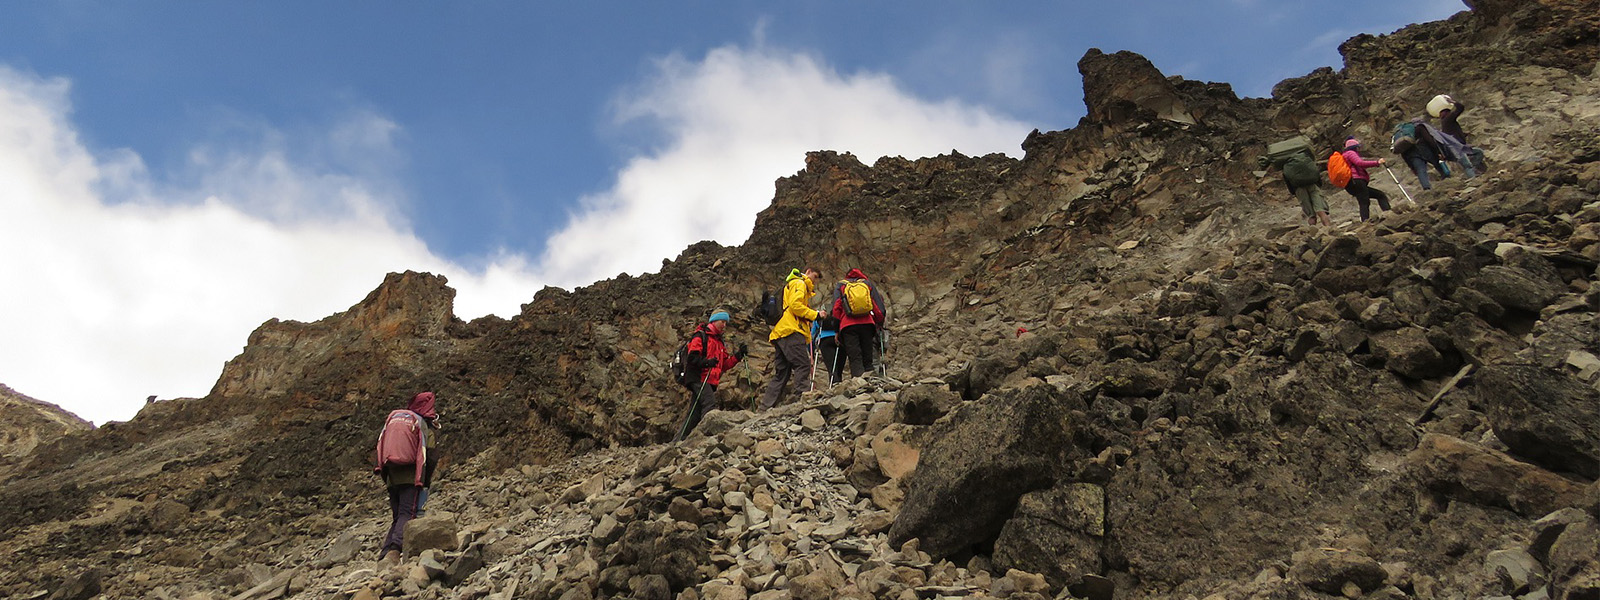 Kilimanjaro Climbing